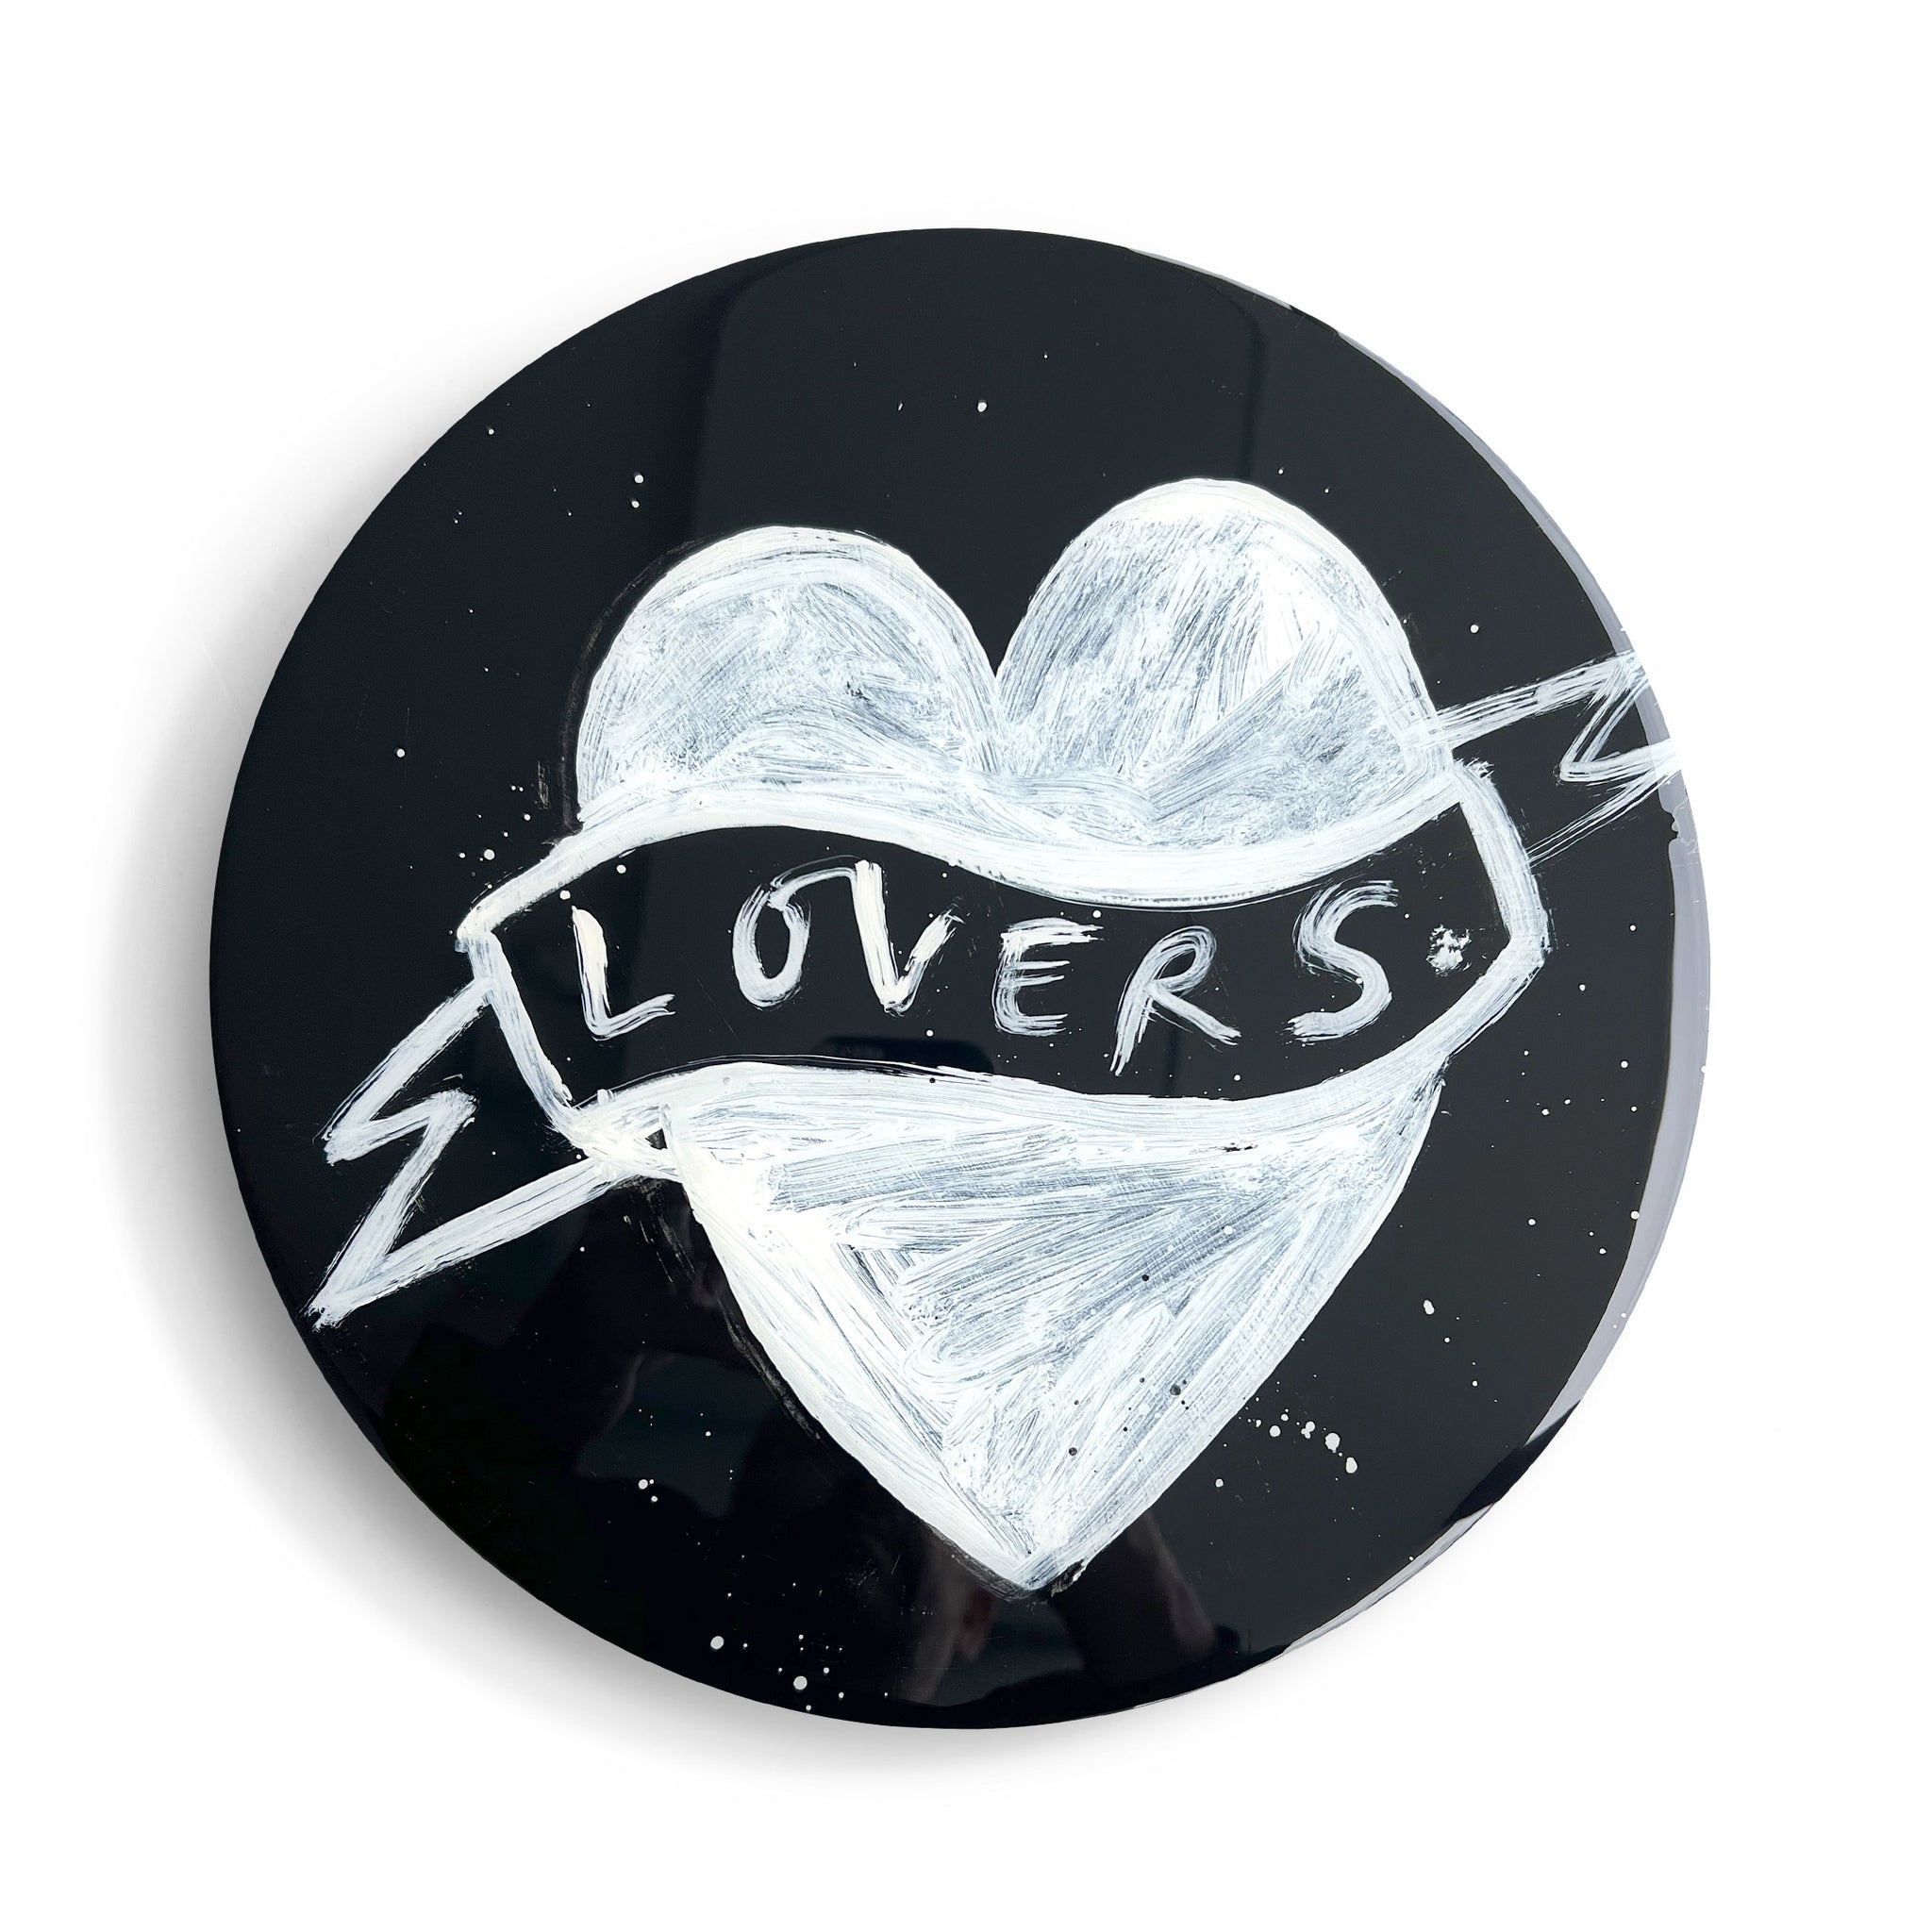 LOVERSSS (circle)